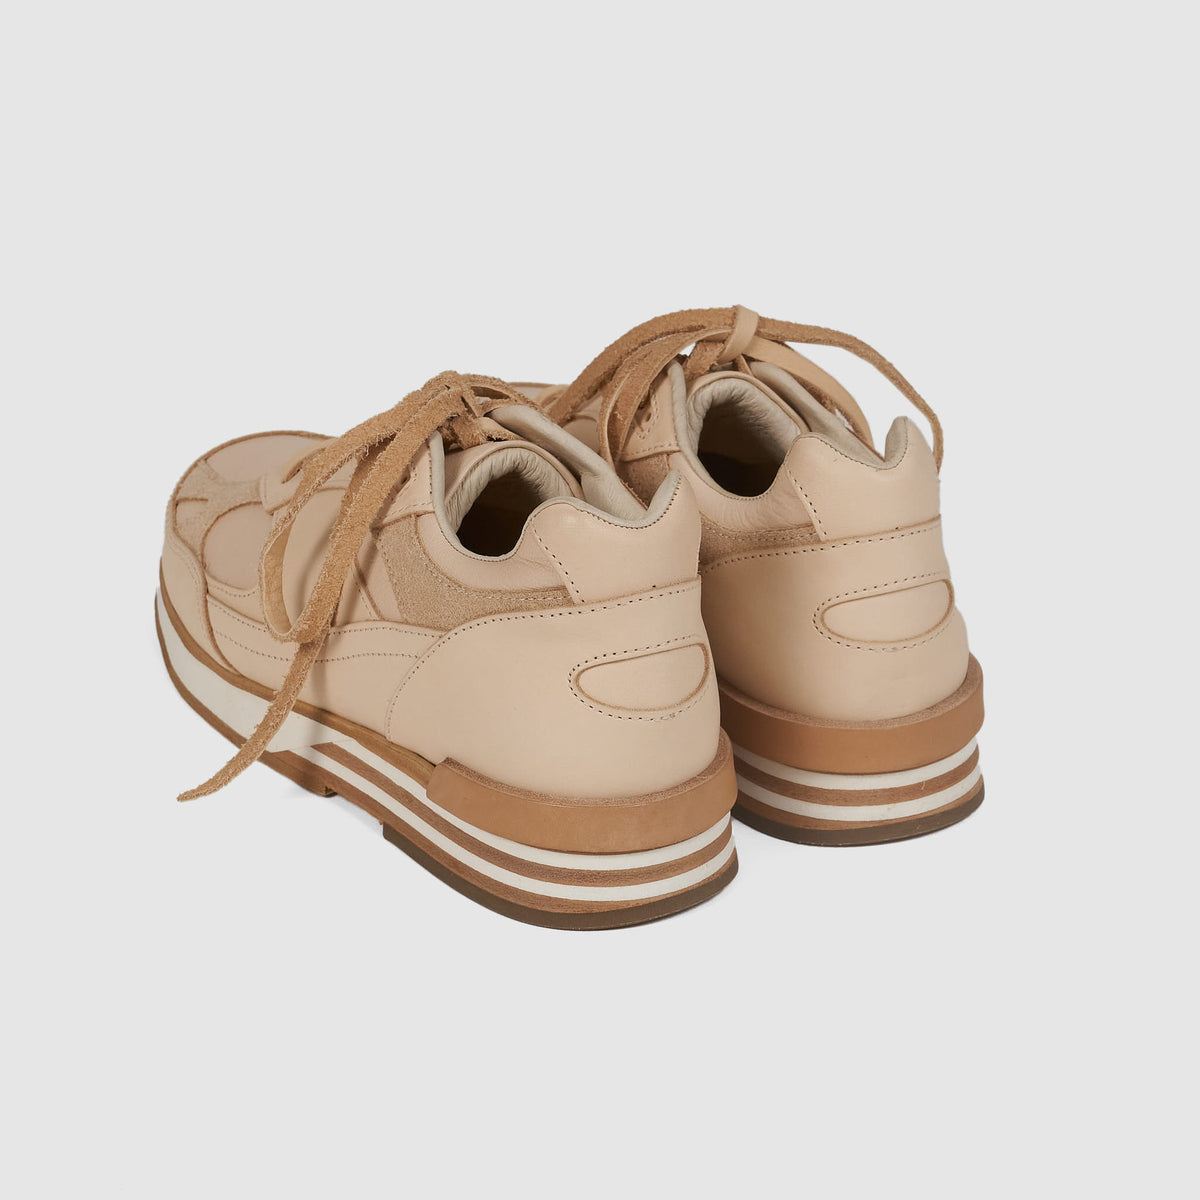 Hender Scheme Manual Industrial mip-28 Handcrafted Sneaker